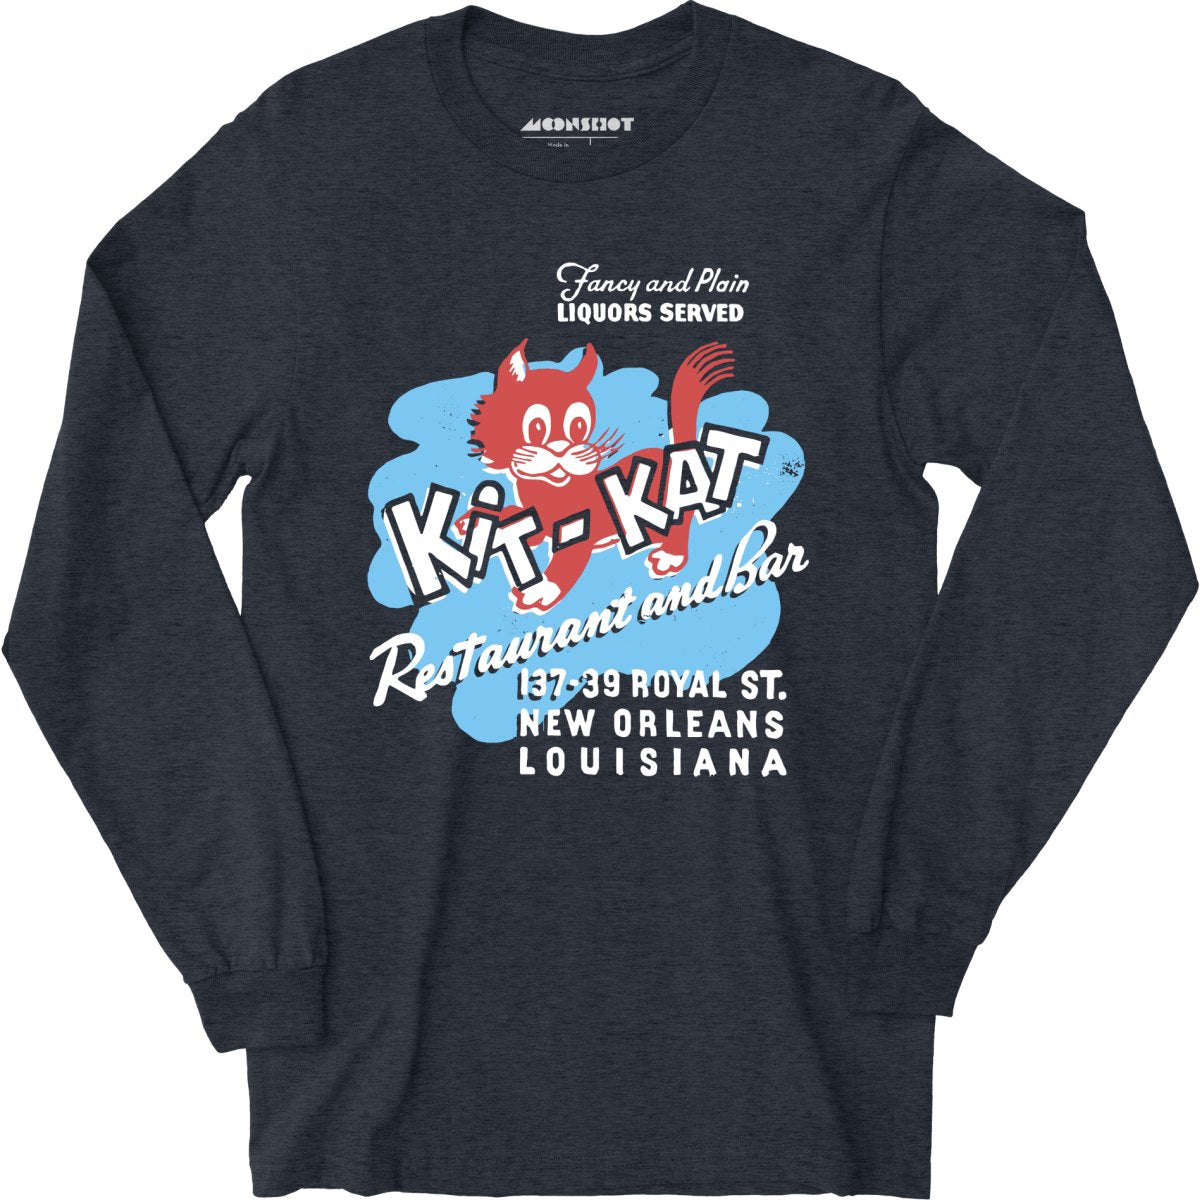 Kit-Kat - New Orleans, LA - Vintage Restaurant - Long Sleeve T-Shirt